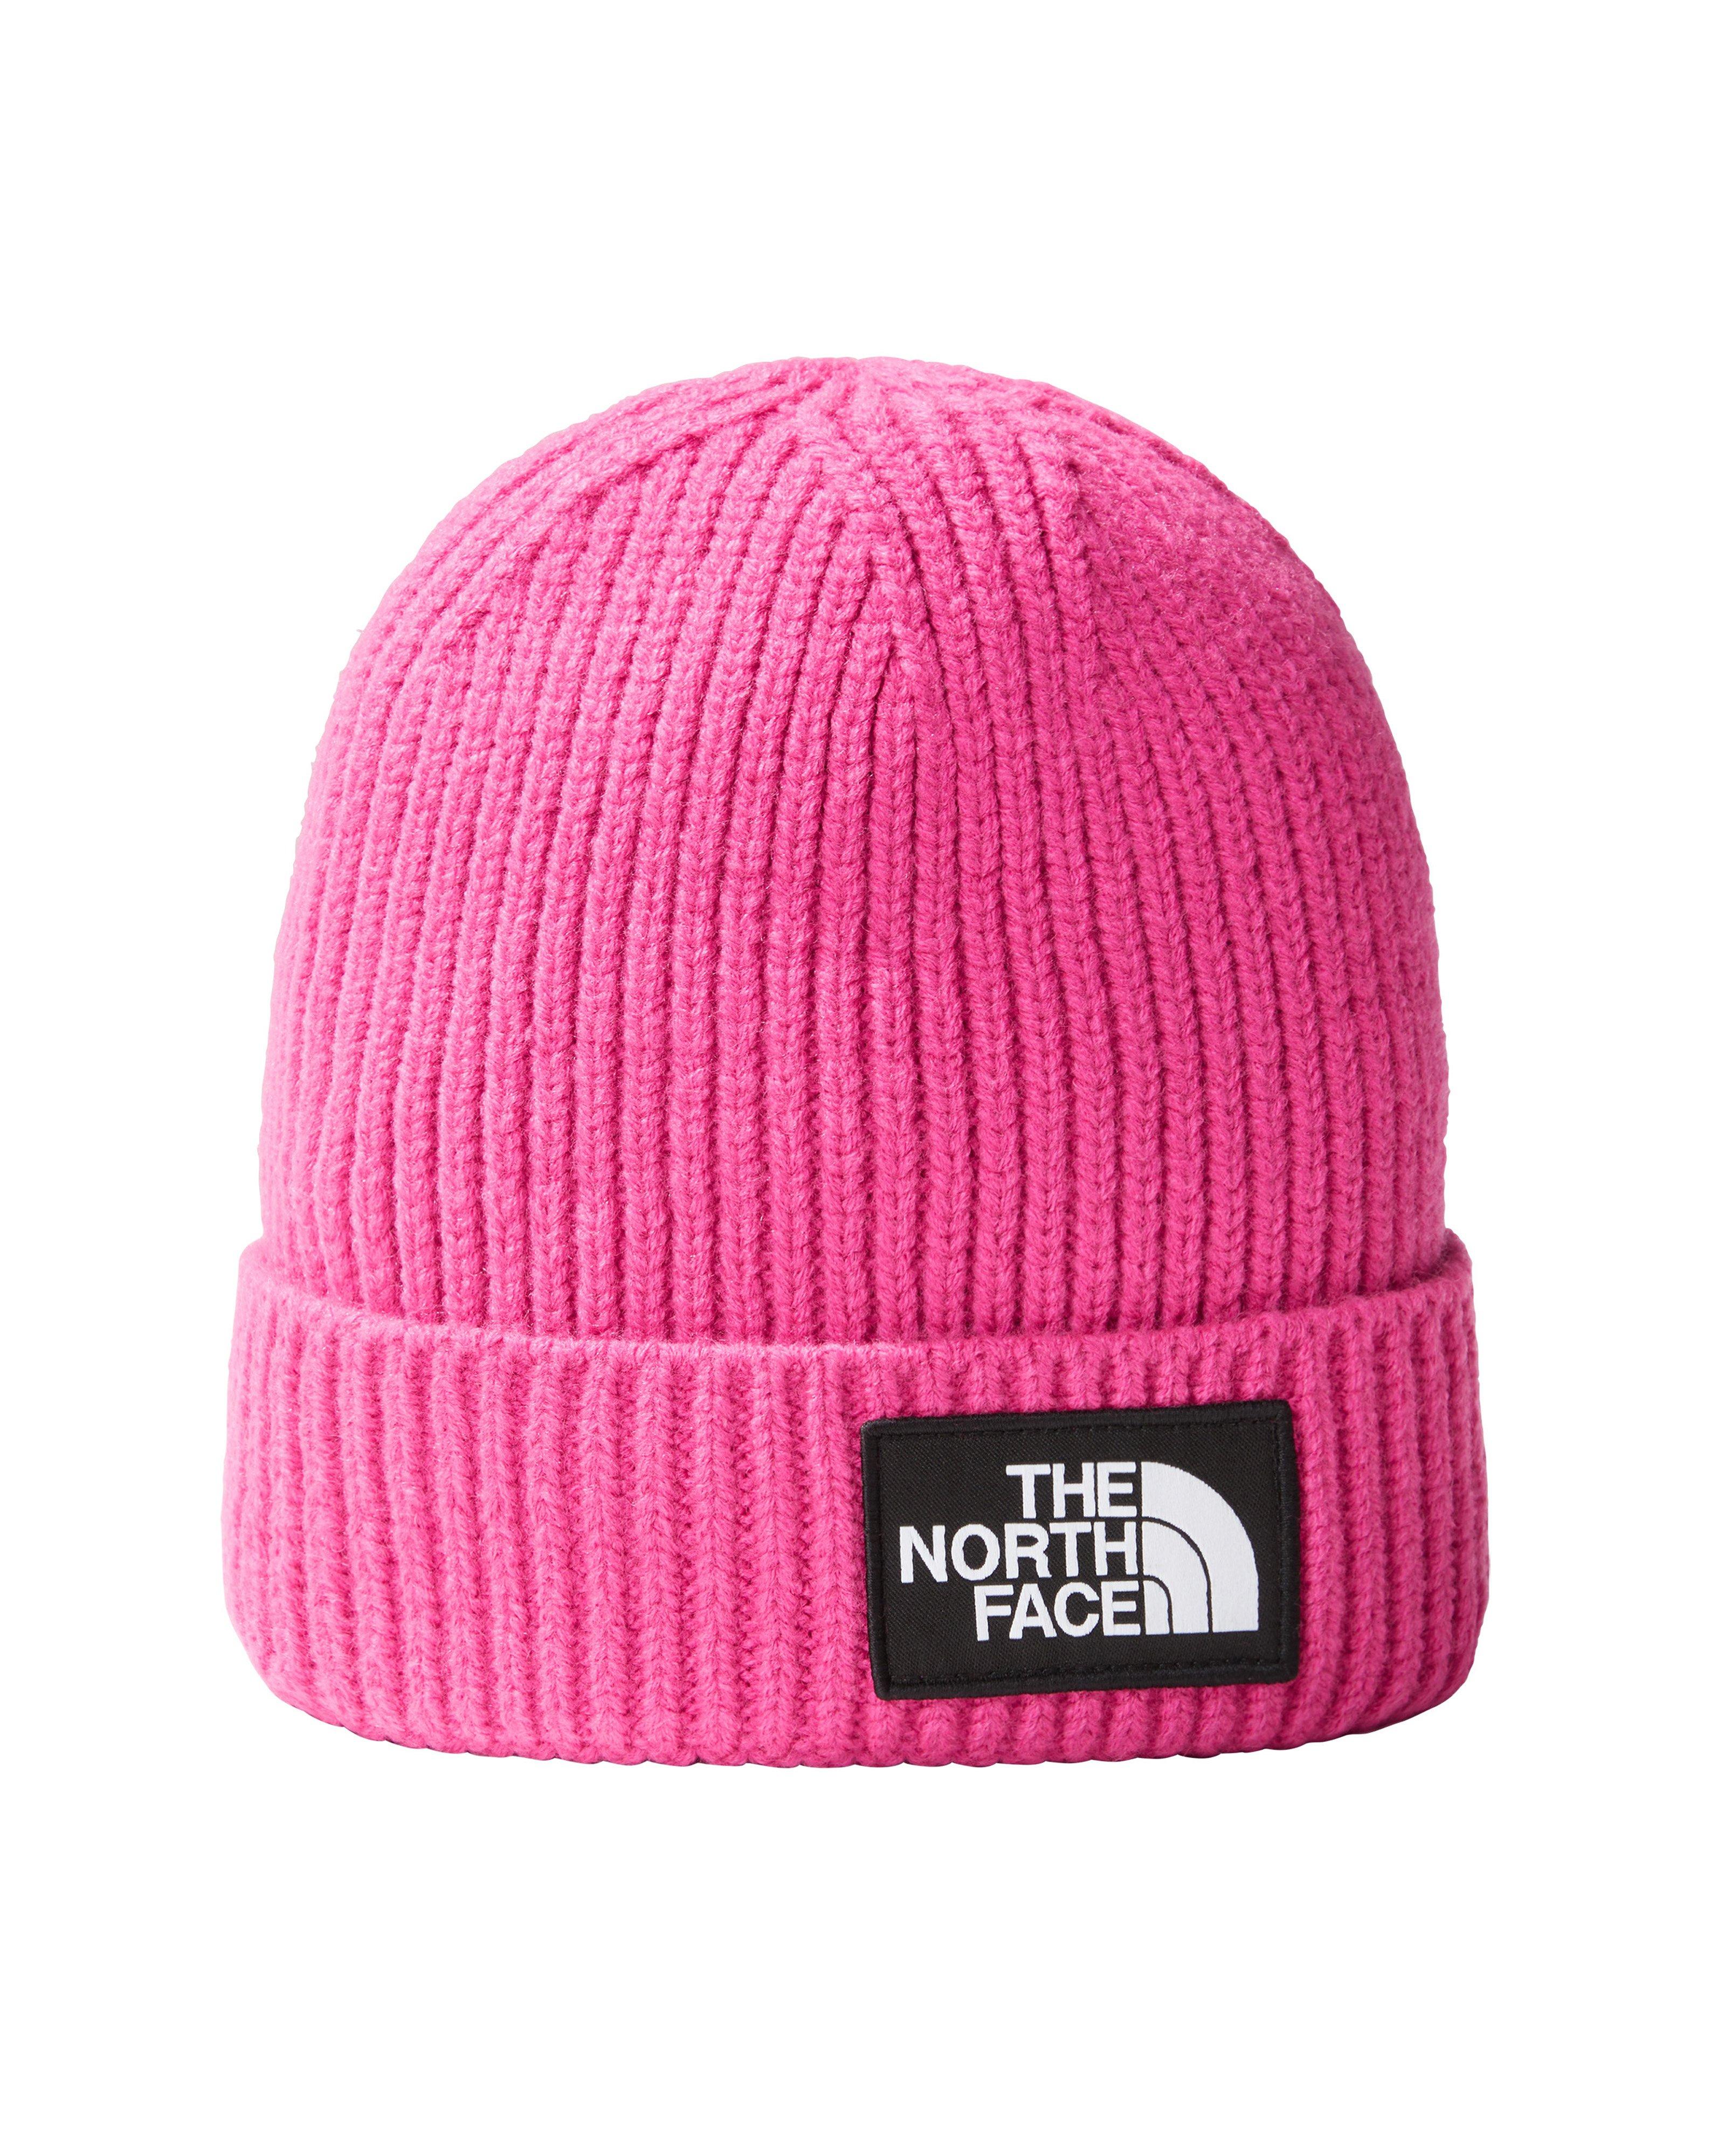 The North Face Kids Box Logo Cuffed Beanie -  Pink